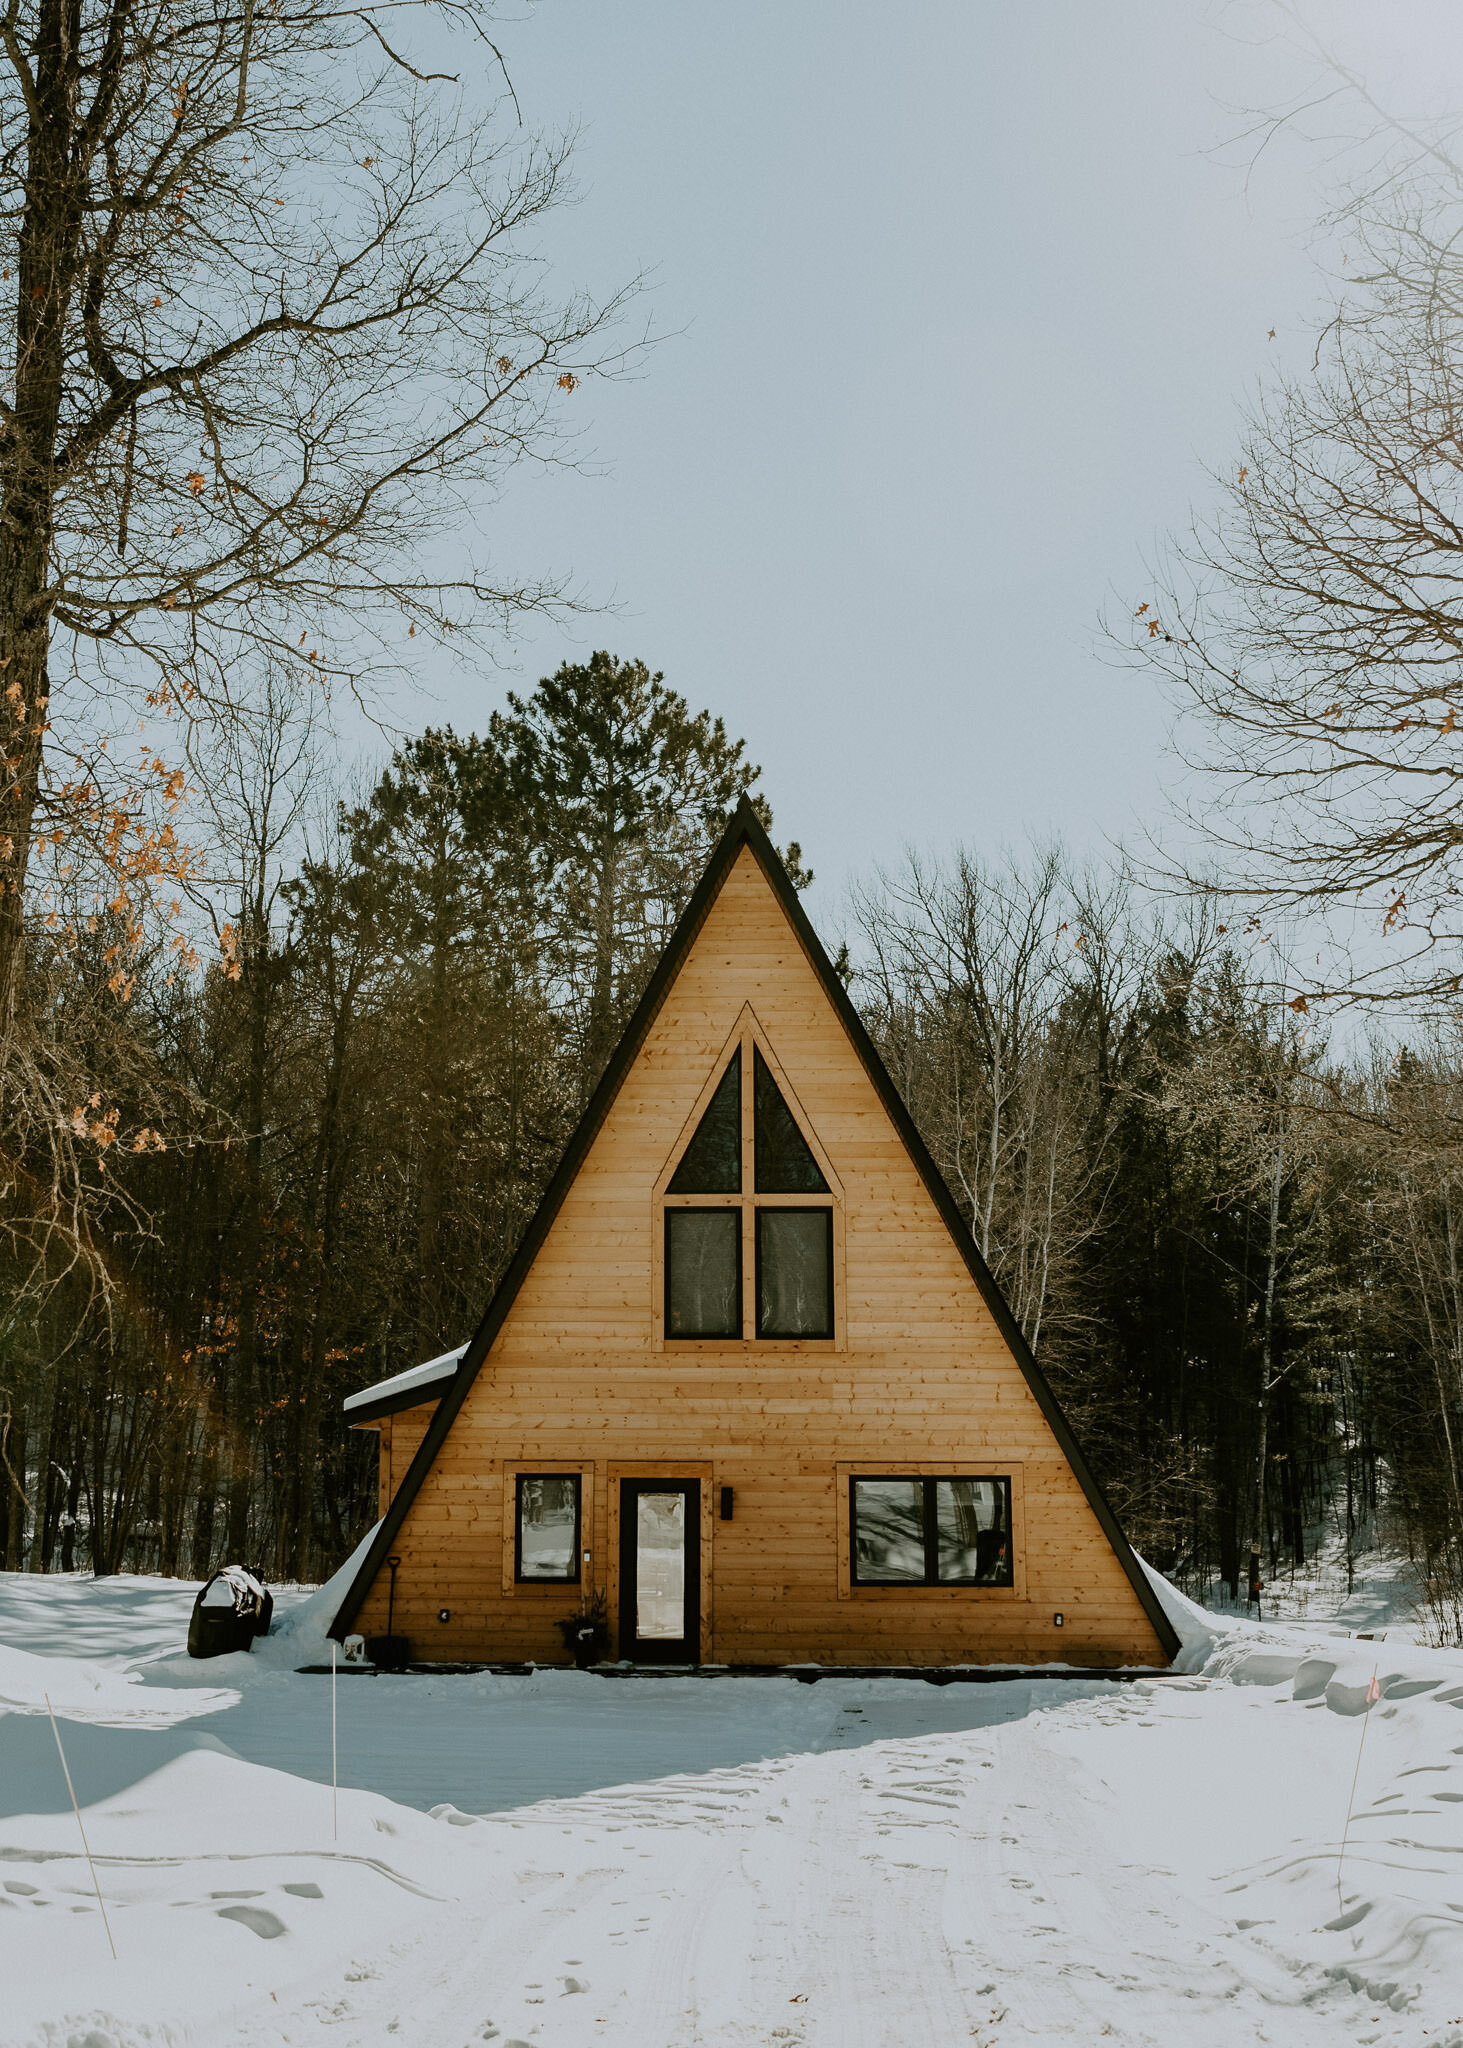 hilhaus-aframe-airbnb-winter-minnesota-00001